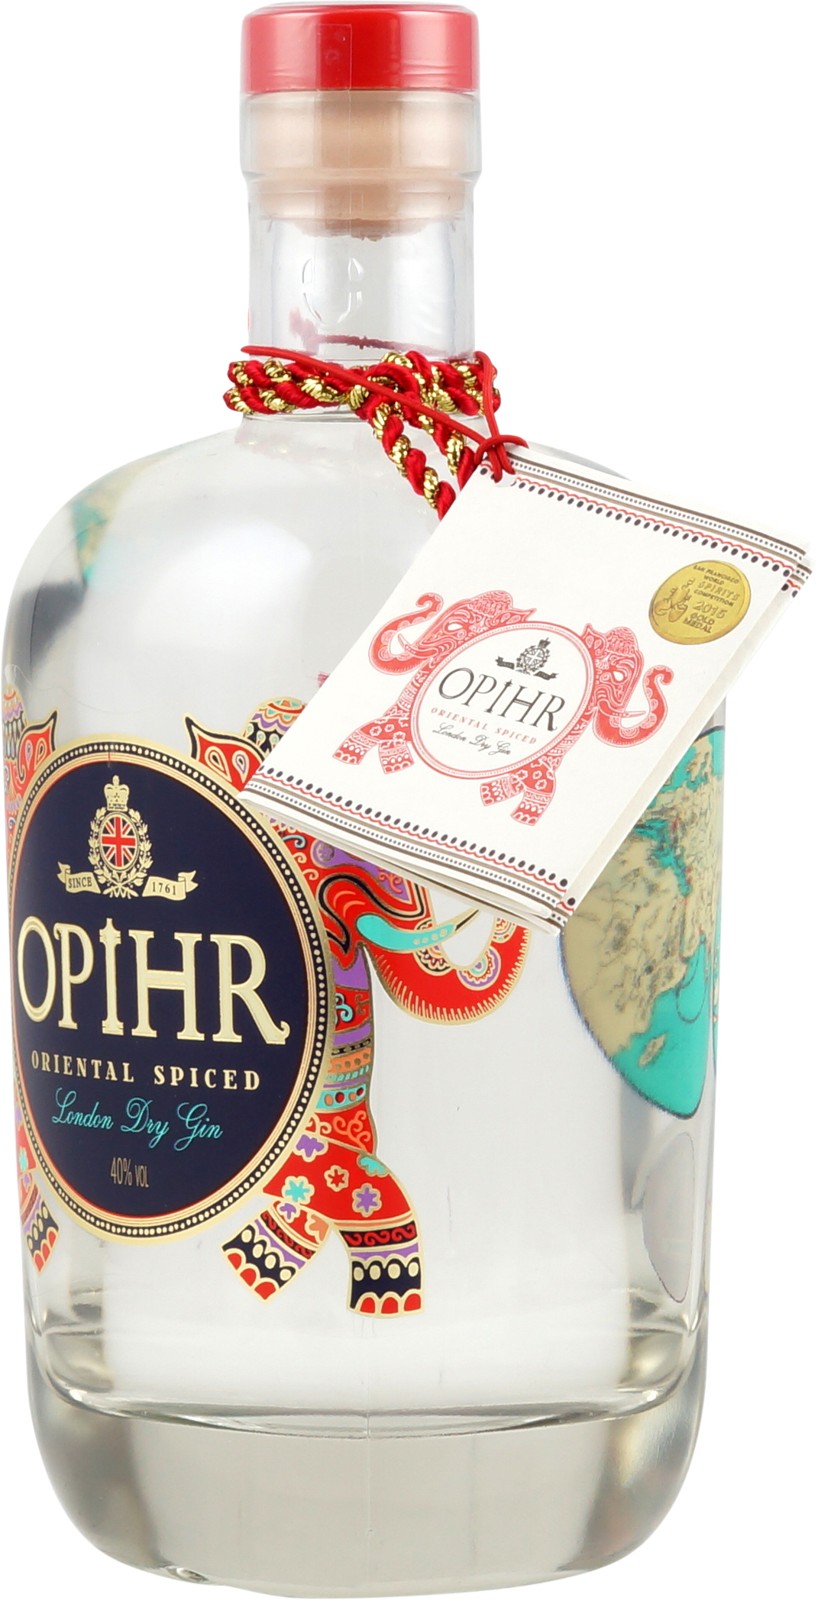 Opihr Oriental Spiced London Dry Shop Gin im